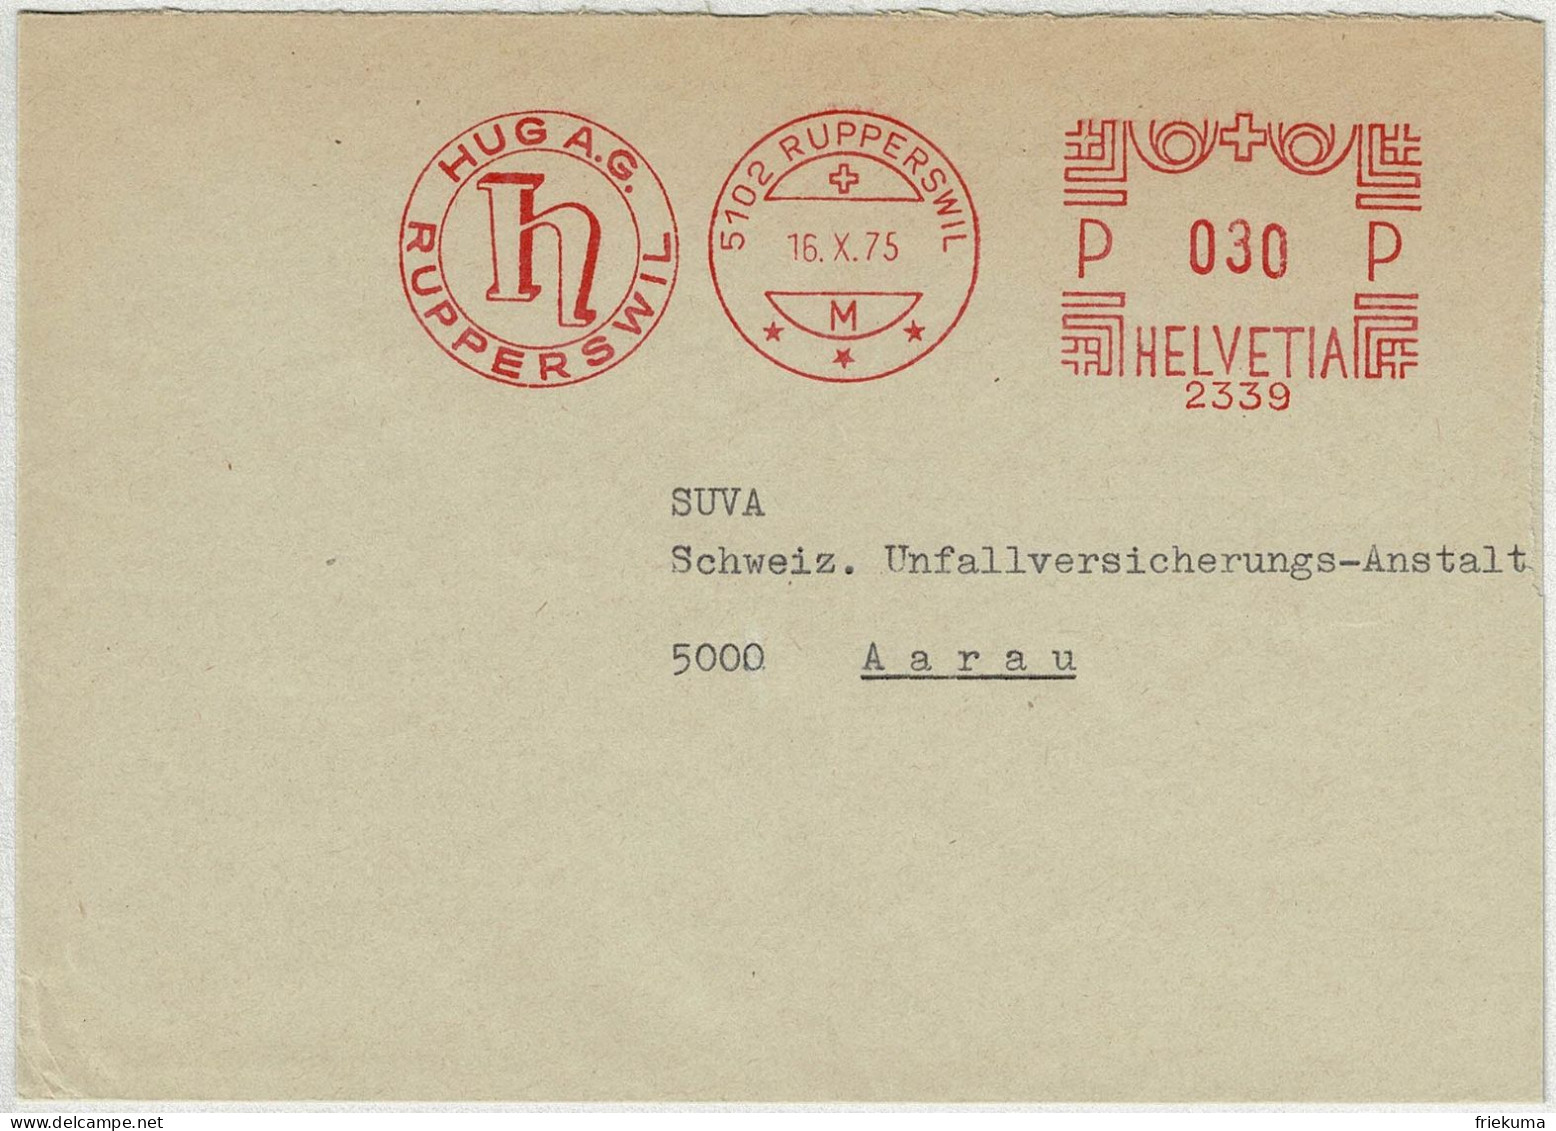 Schweiz 1975, Brief Freistempel / EMA / Meterstamp Hug Rupperswil - Aarau - Frankiermaschinen (FraMA)